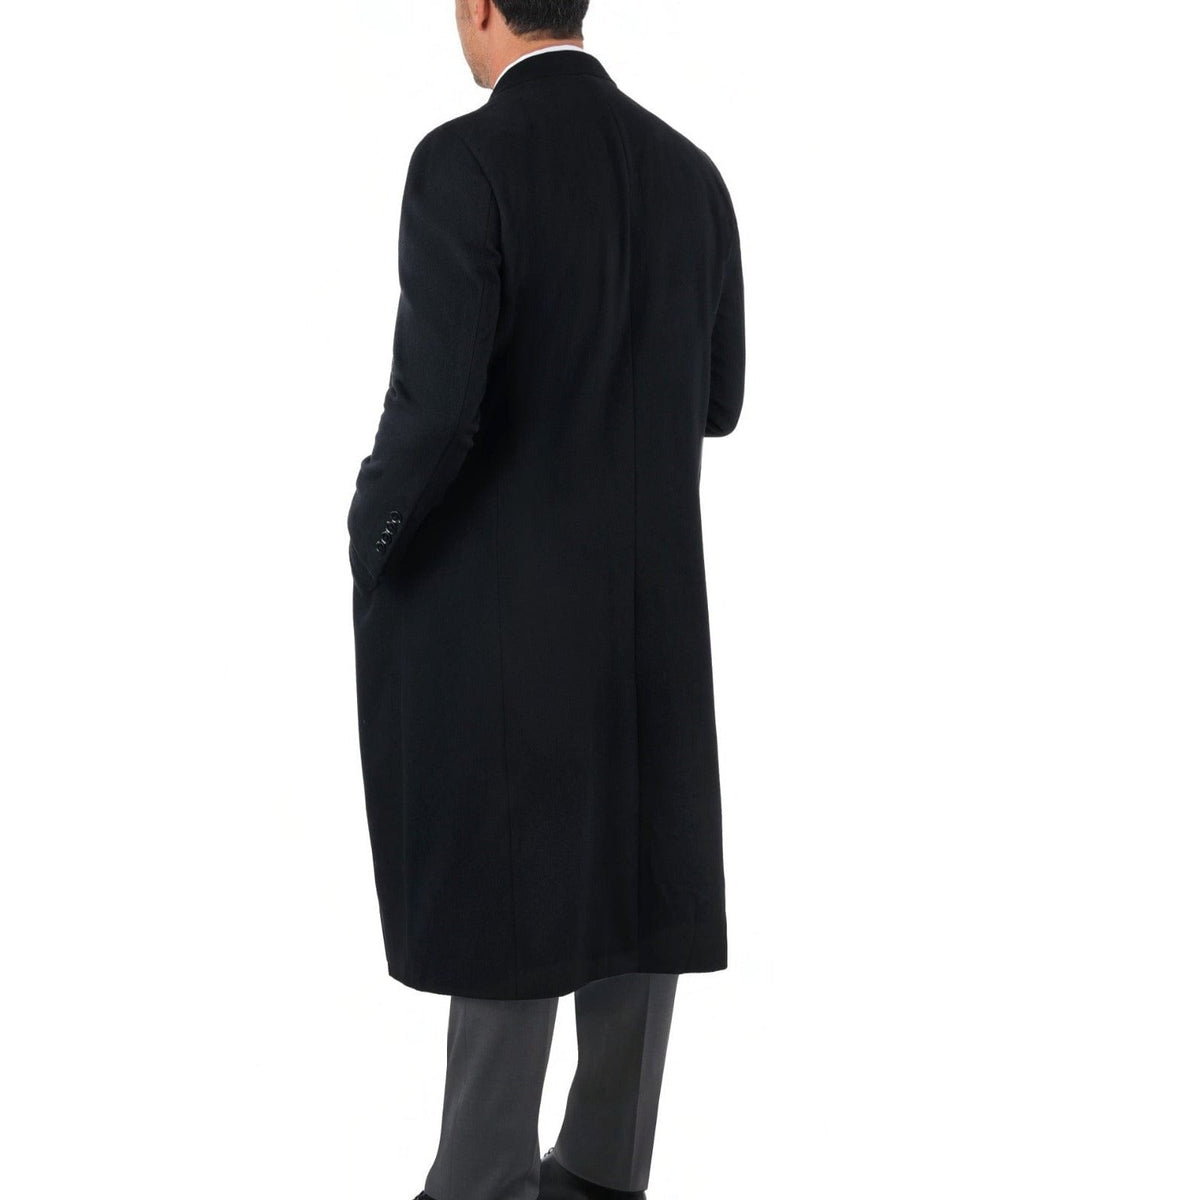 Arthur Black OUTERWEAR Regular Fit Solid Full Length Wool Cashmere Overcoat